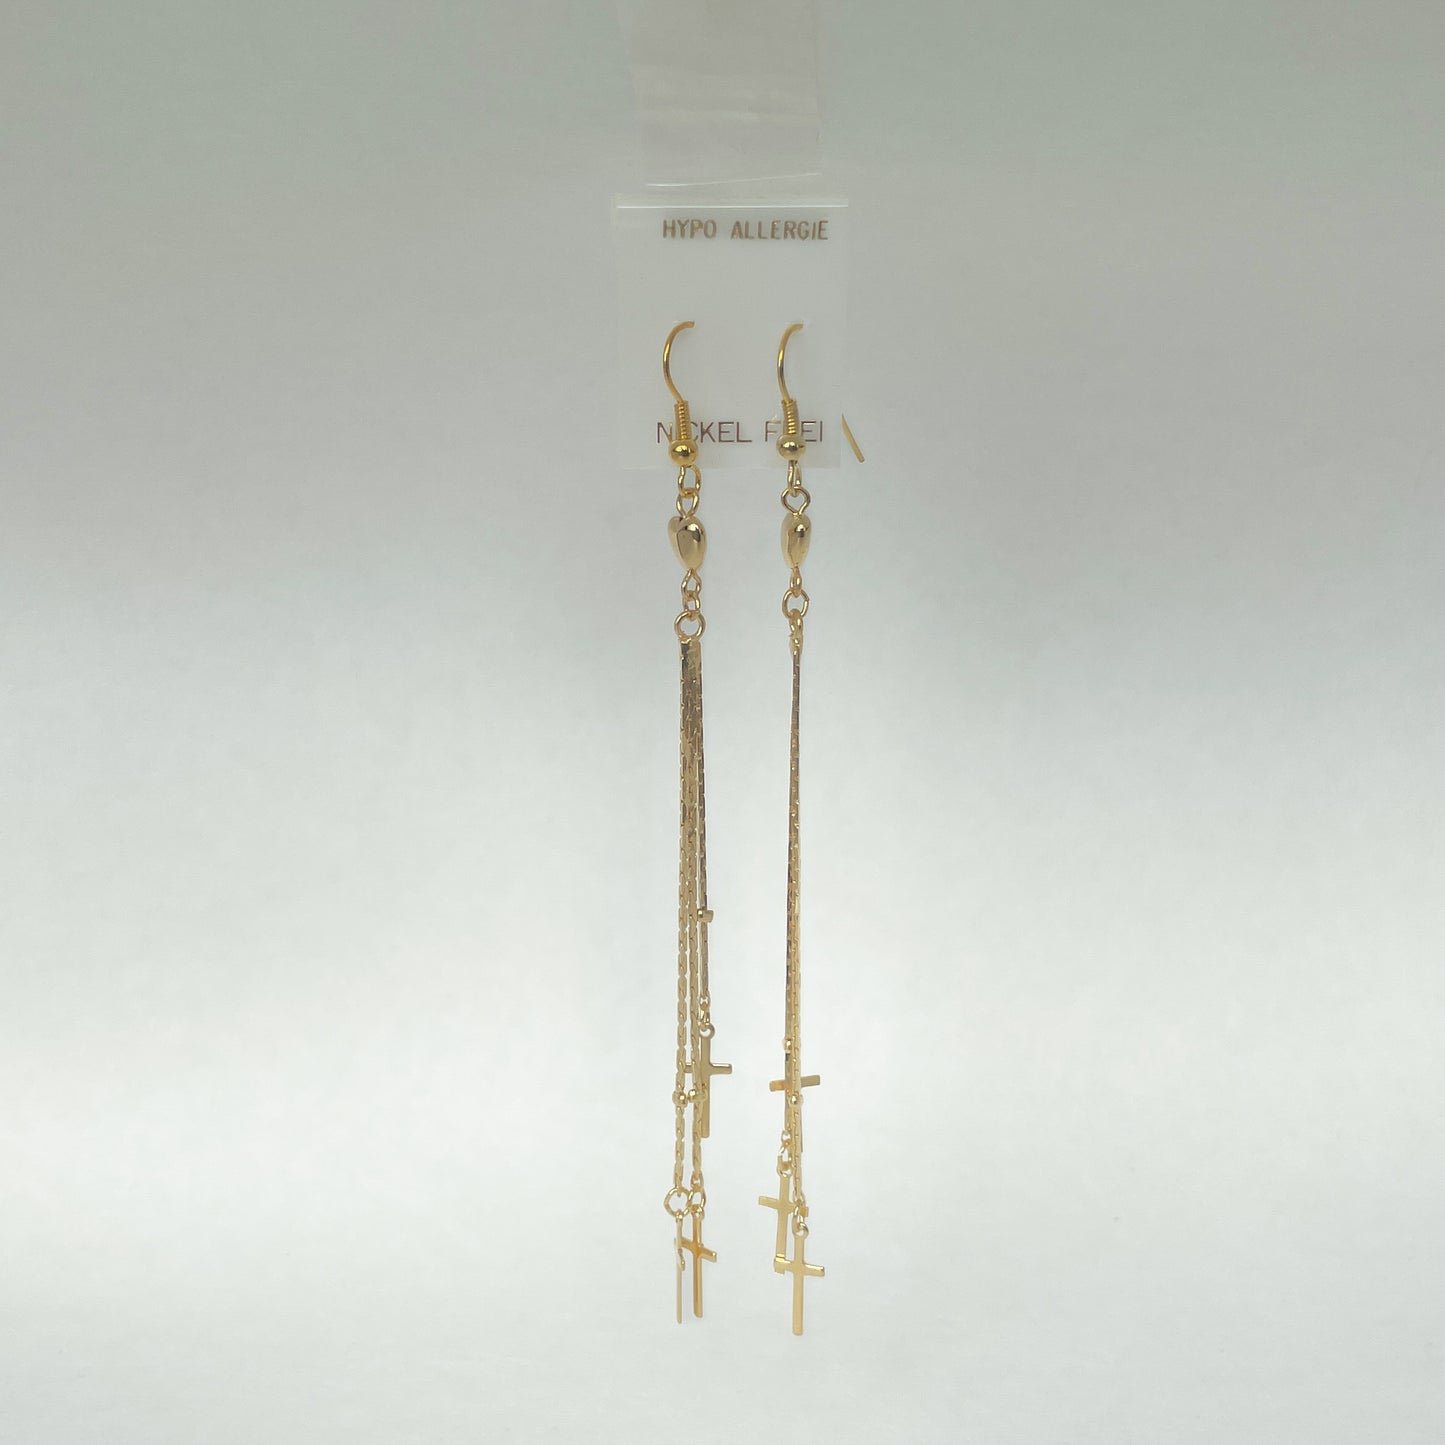 WL_1205231 Handmade Fashion Jewerly Earrings